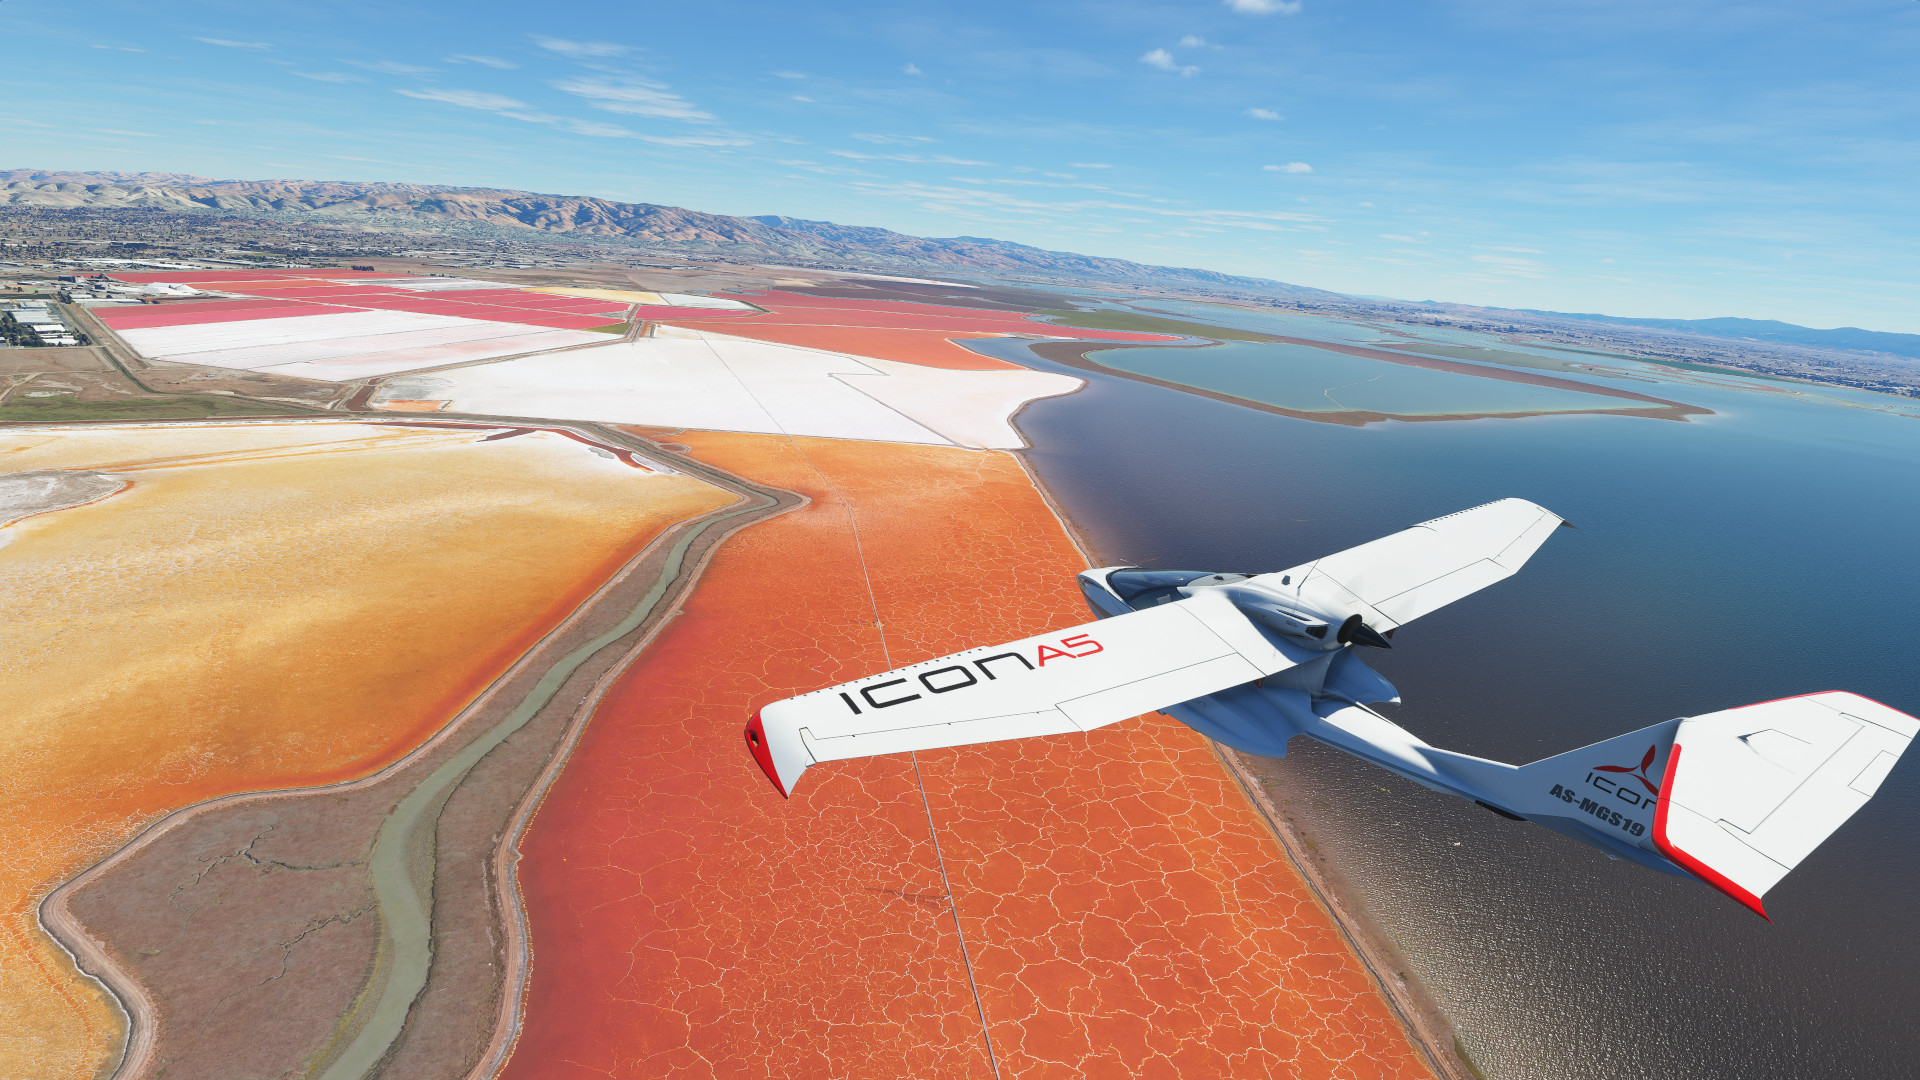 Microsoft Flight Simulator: Anniversary Edition brings new planes and more